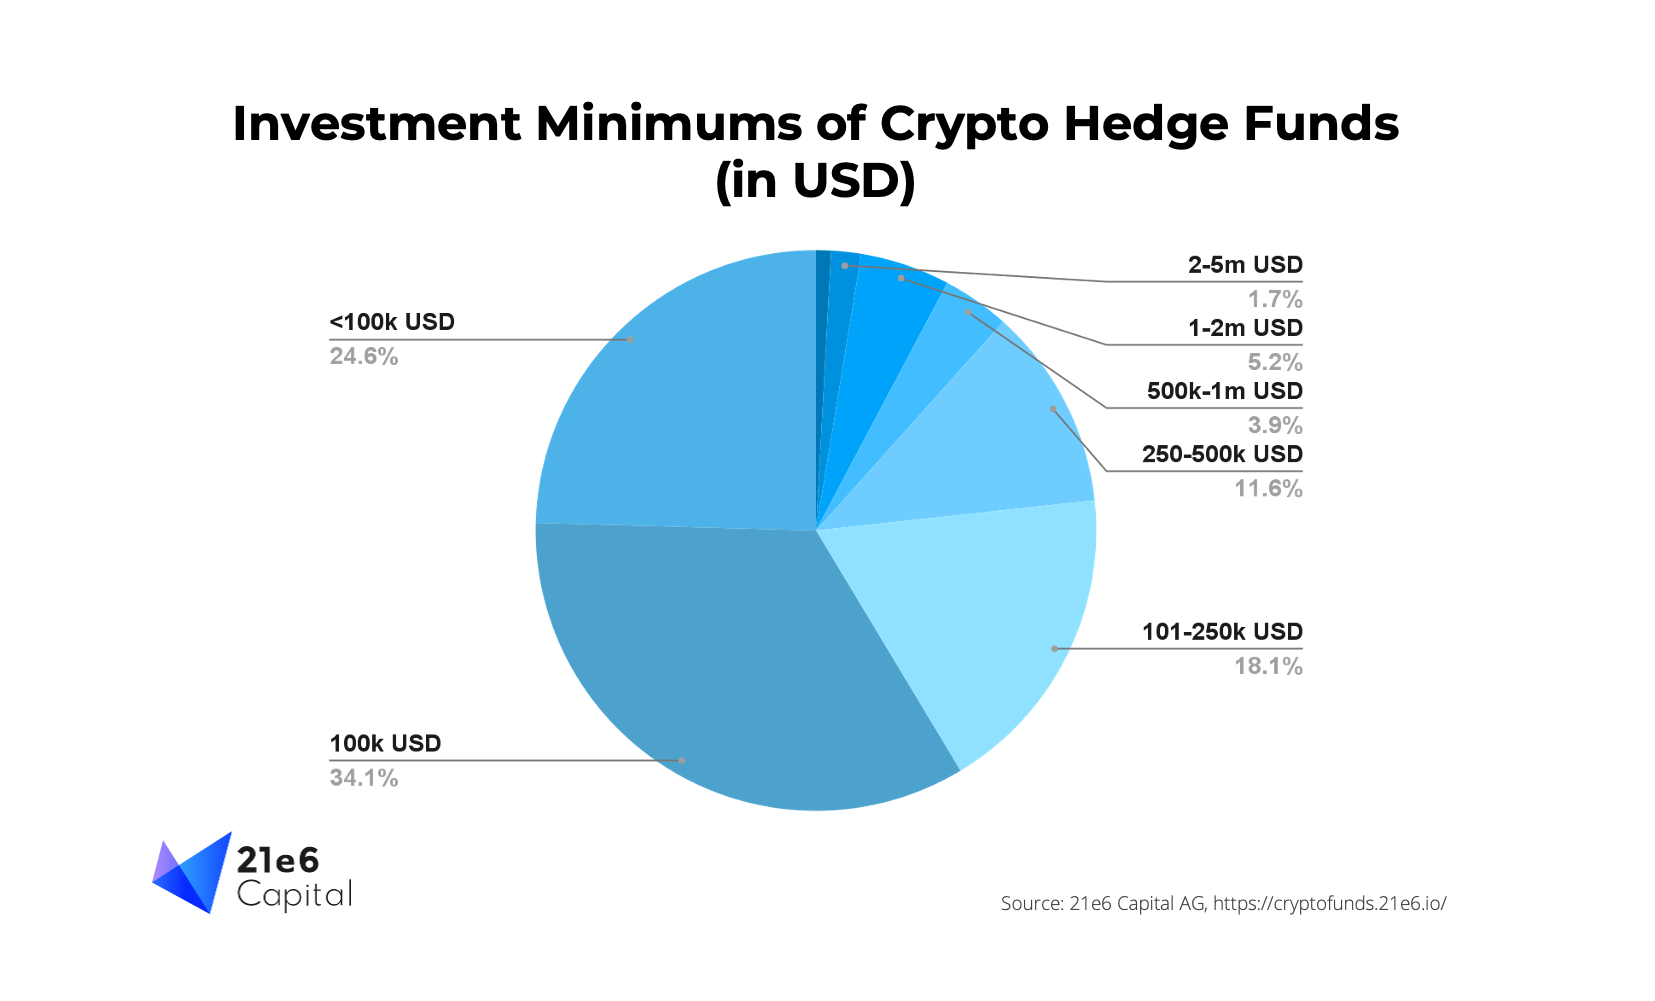 crypto fund investment minimums pie chart